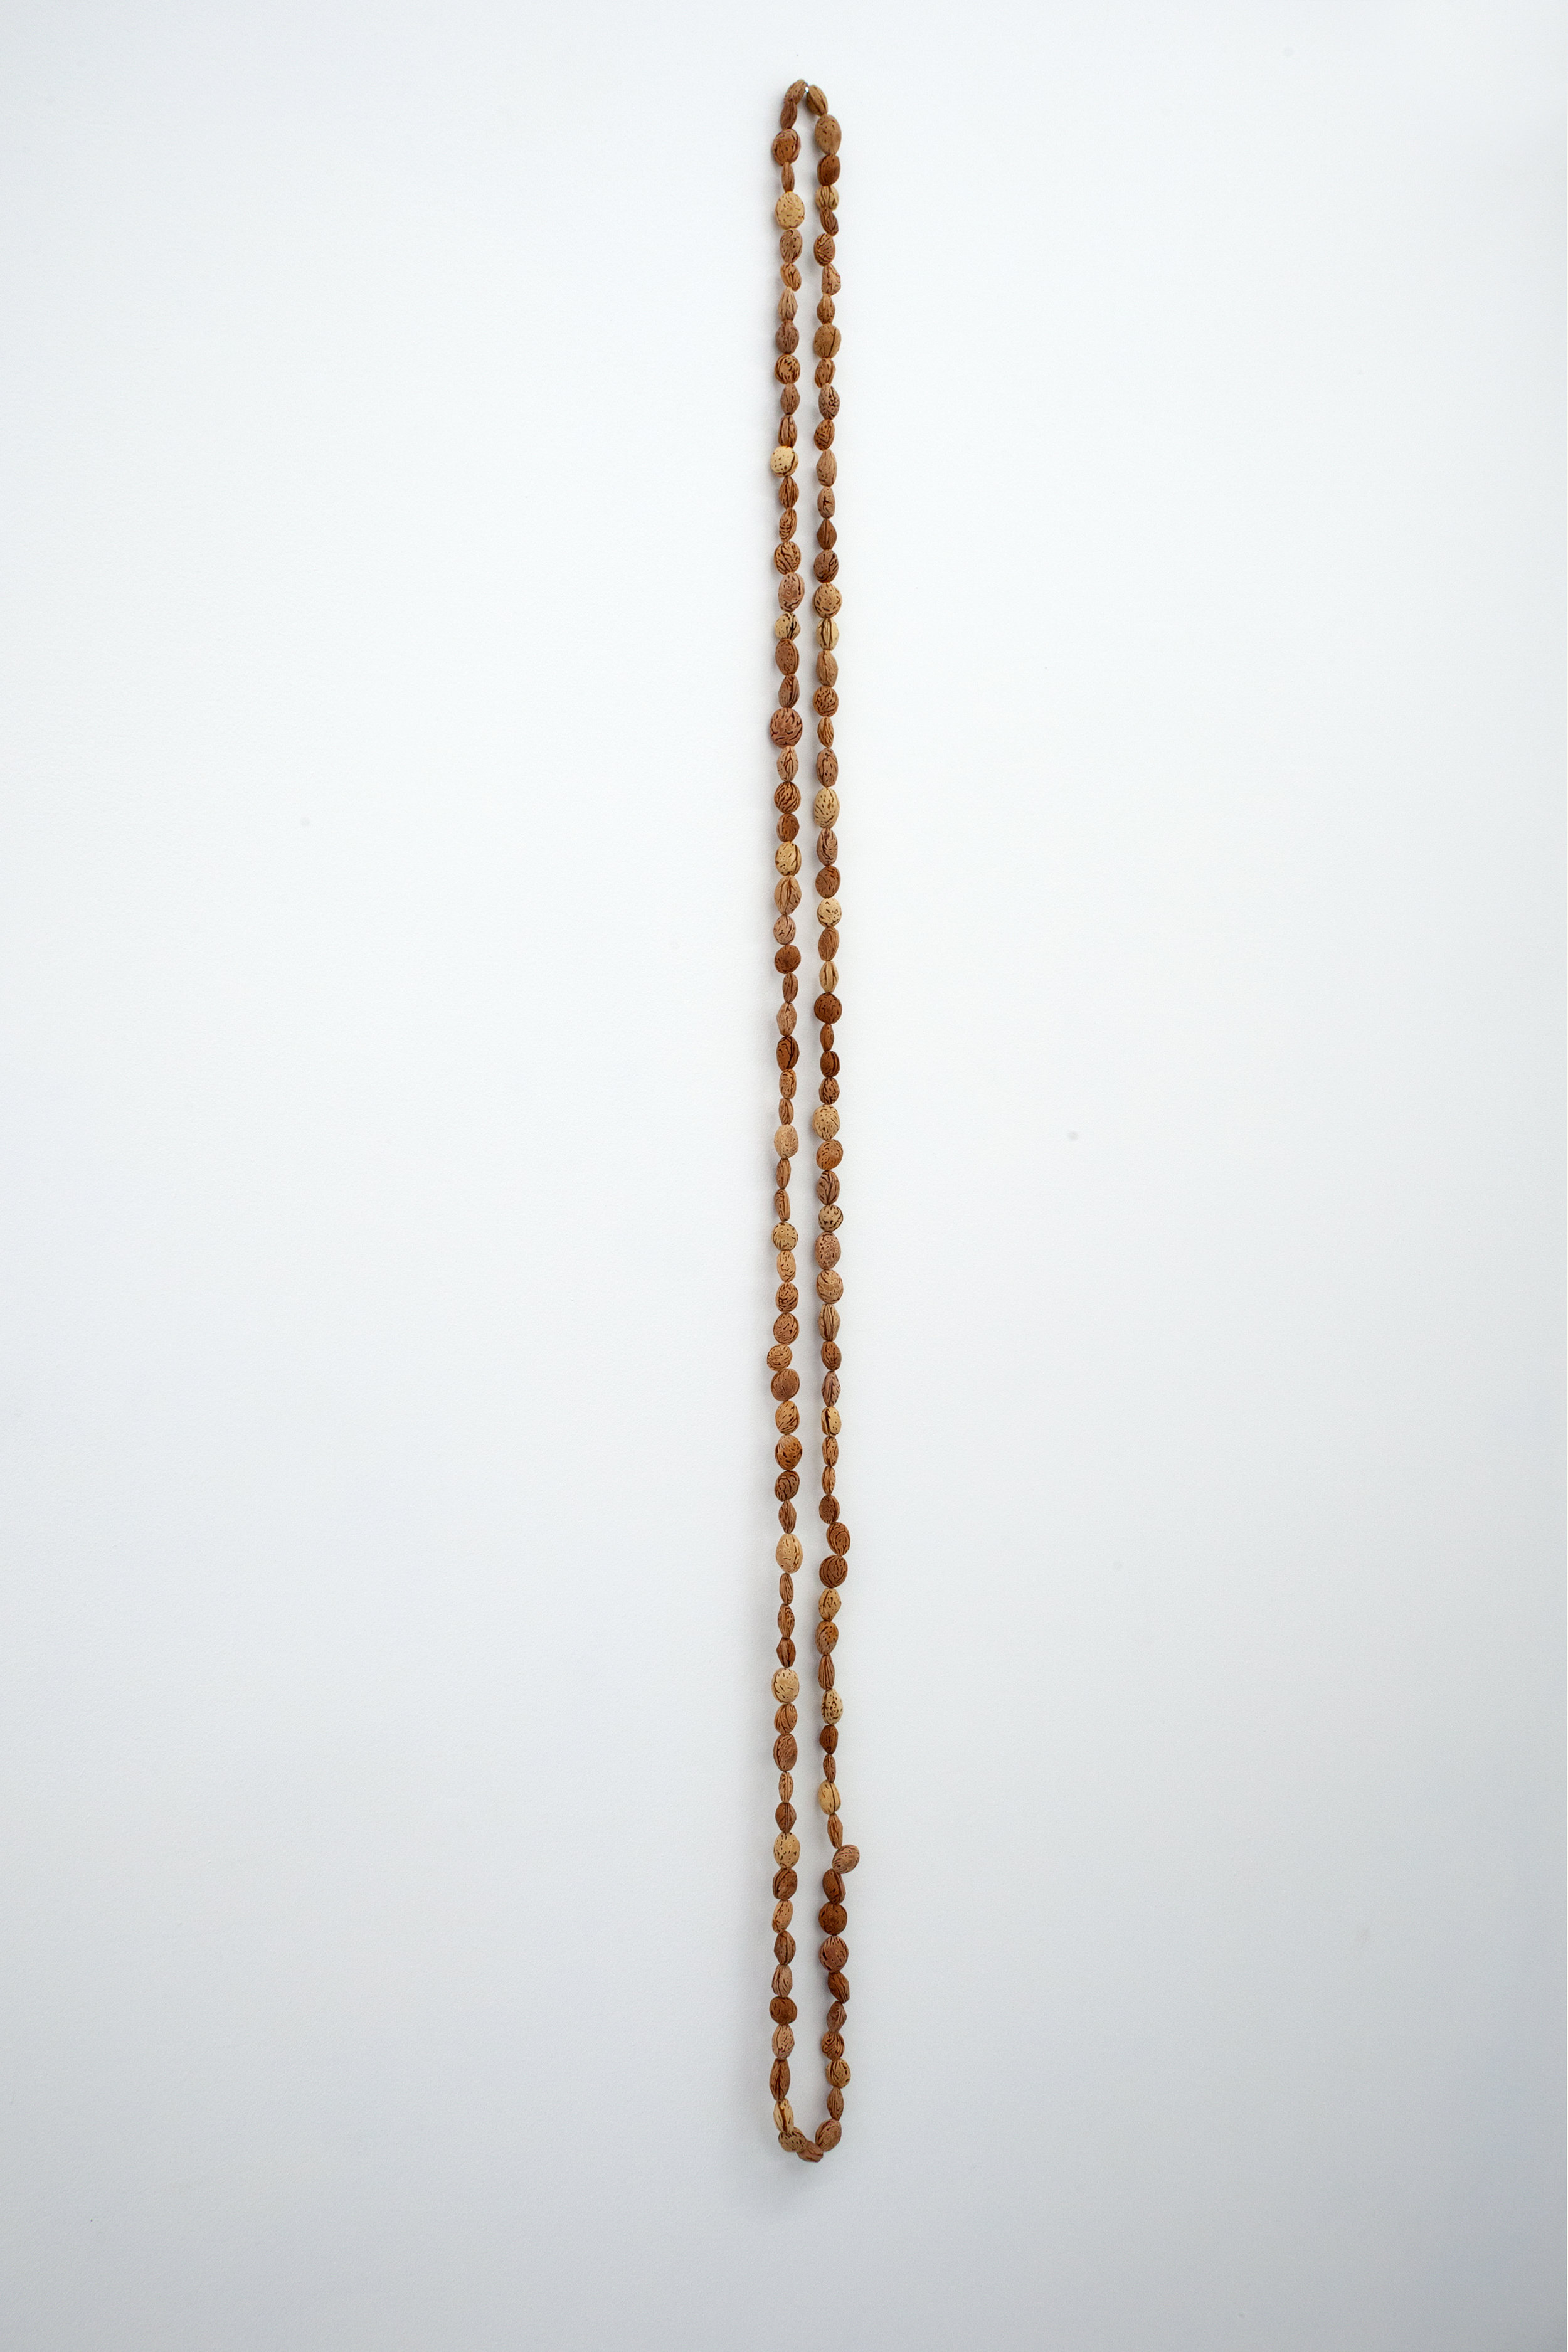  Elizabeth Atterbury,  Beads III , 2018, Peach Pits, 61.50 x 1 x 1 in 